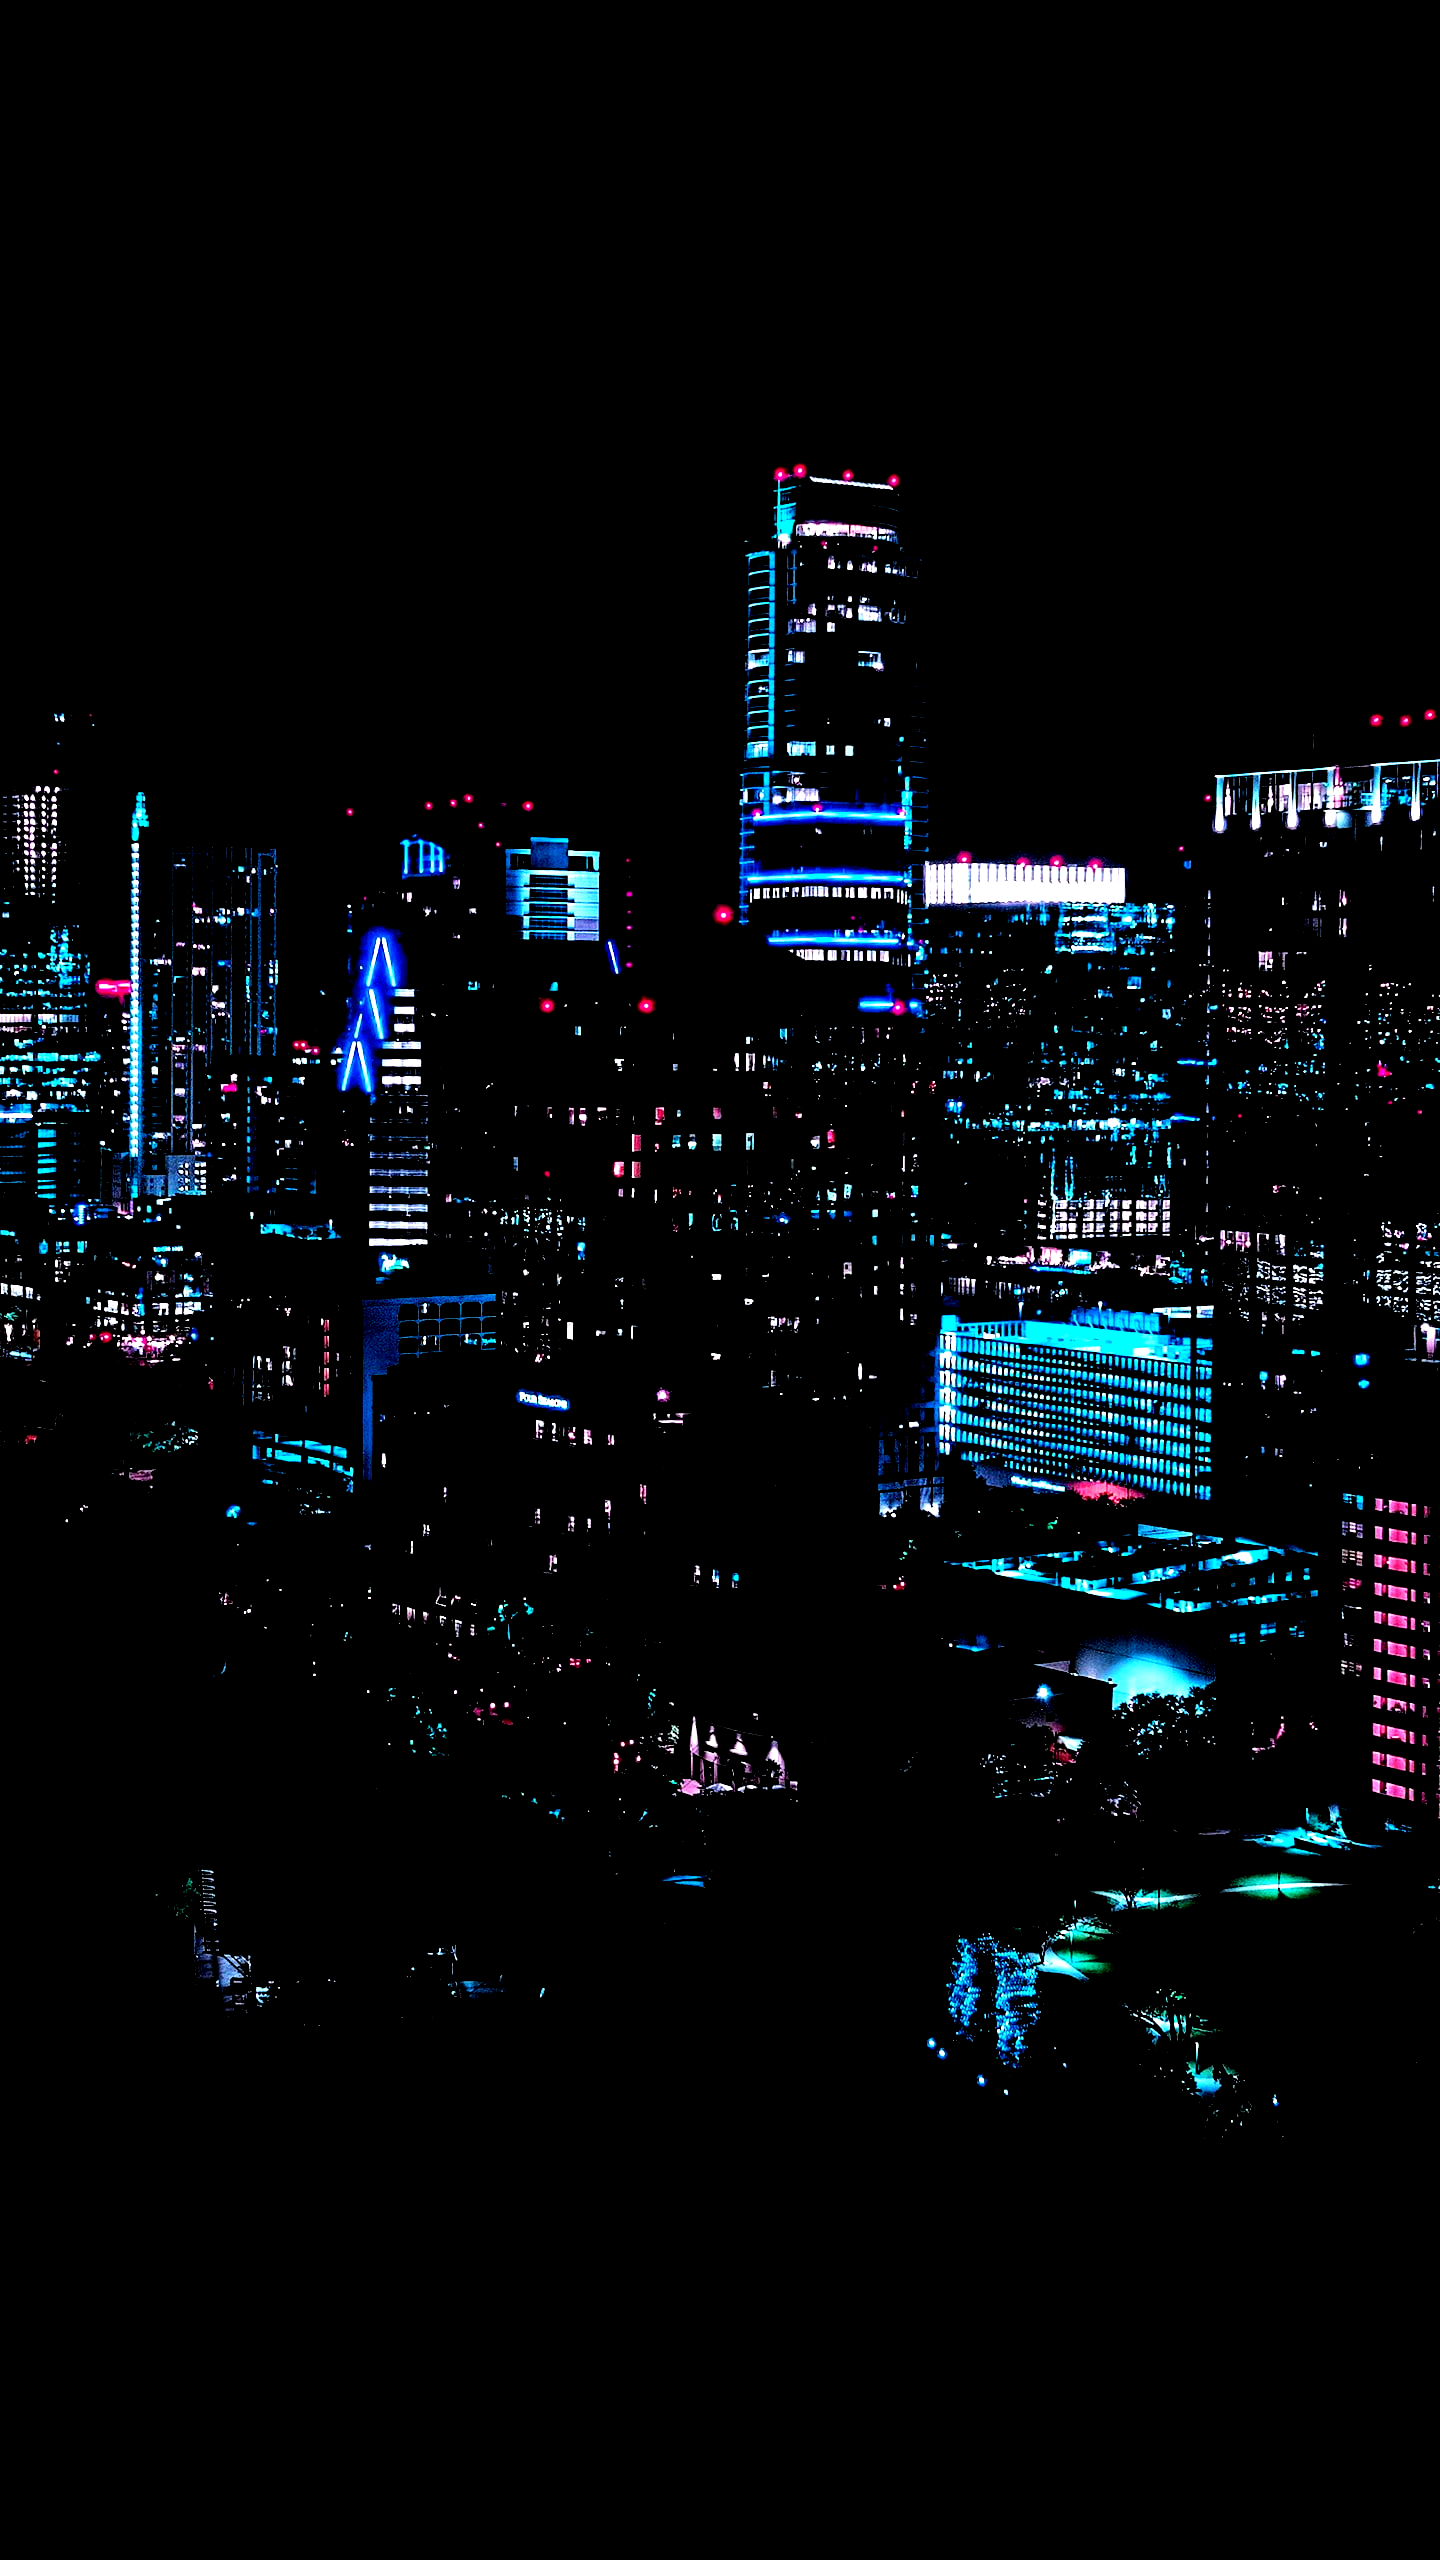 city #night #dark #building #lights #blue city lights #vertical portrait display #black K #w. City lights wallpaper, Cityscape wallpaper, Dark wallpaper iphone